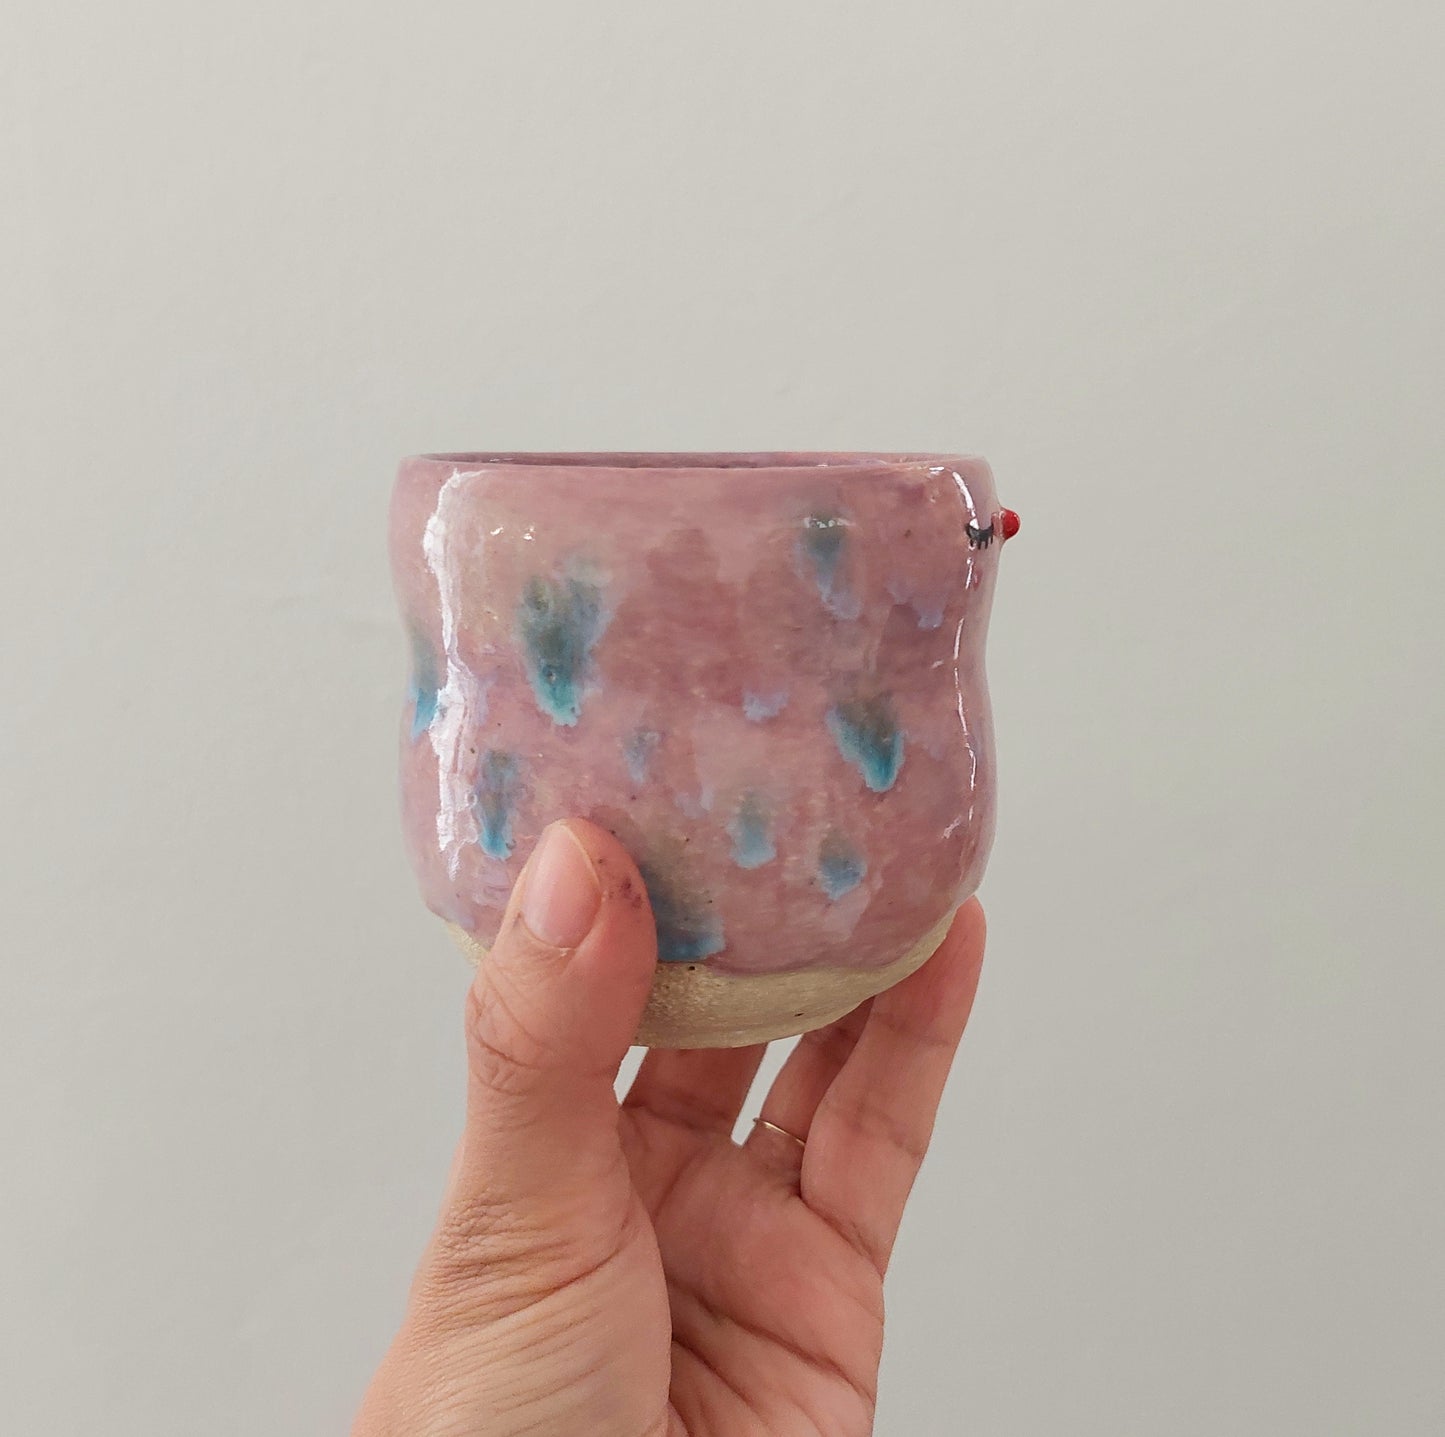 Melty pierrot tea cup - raspberry surprise